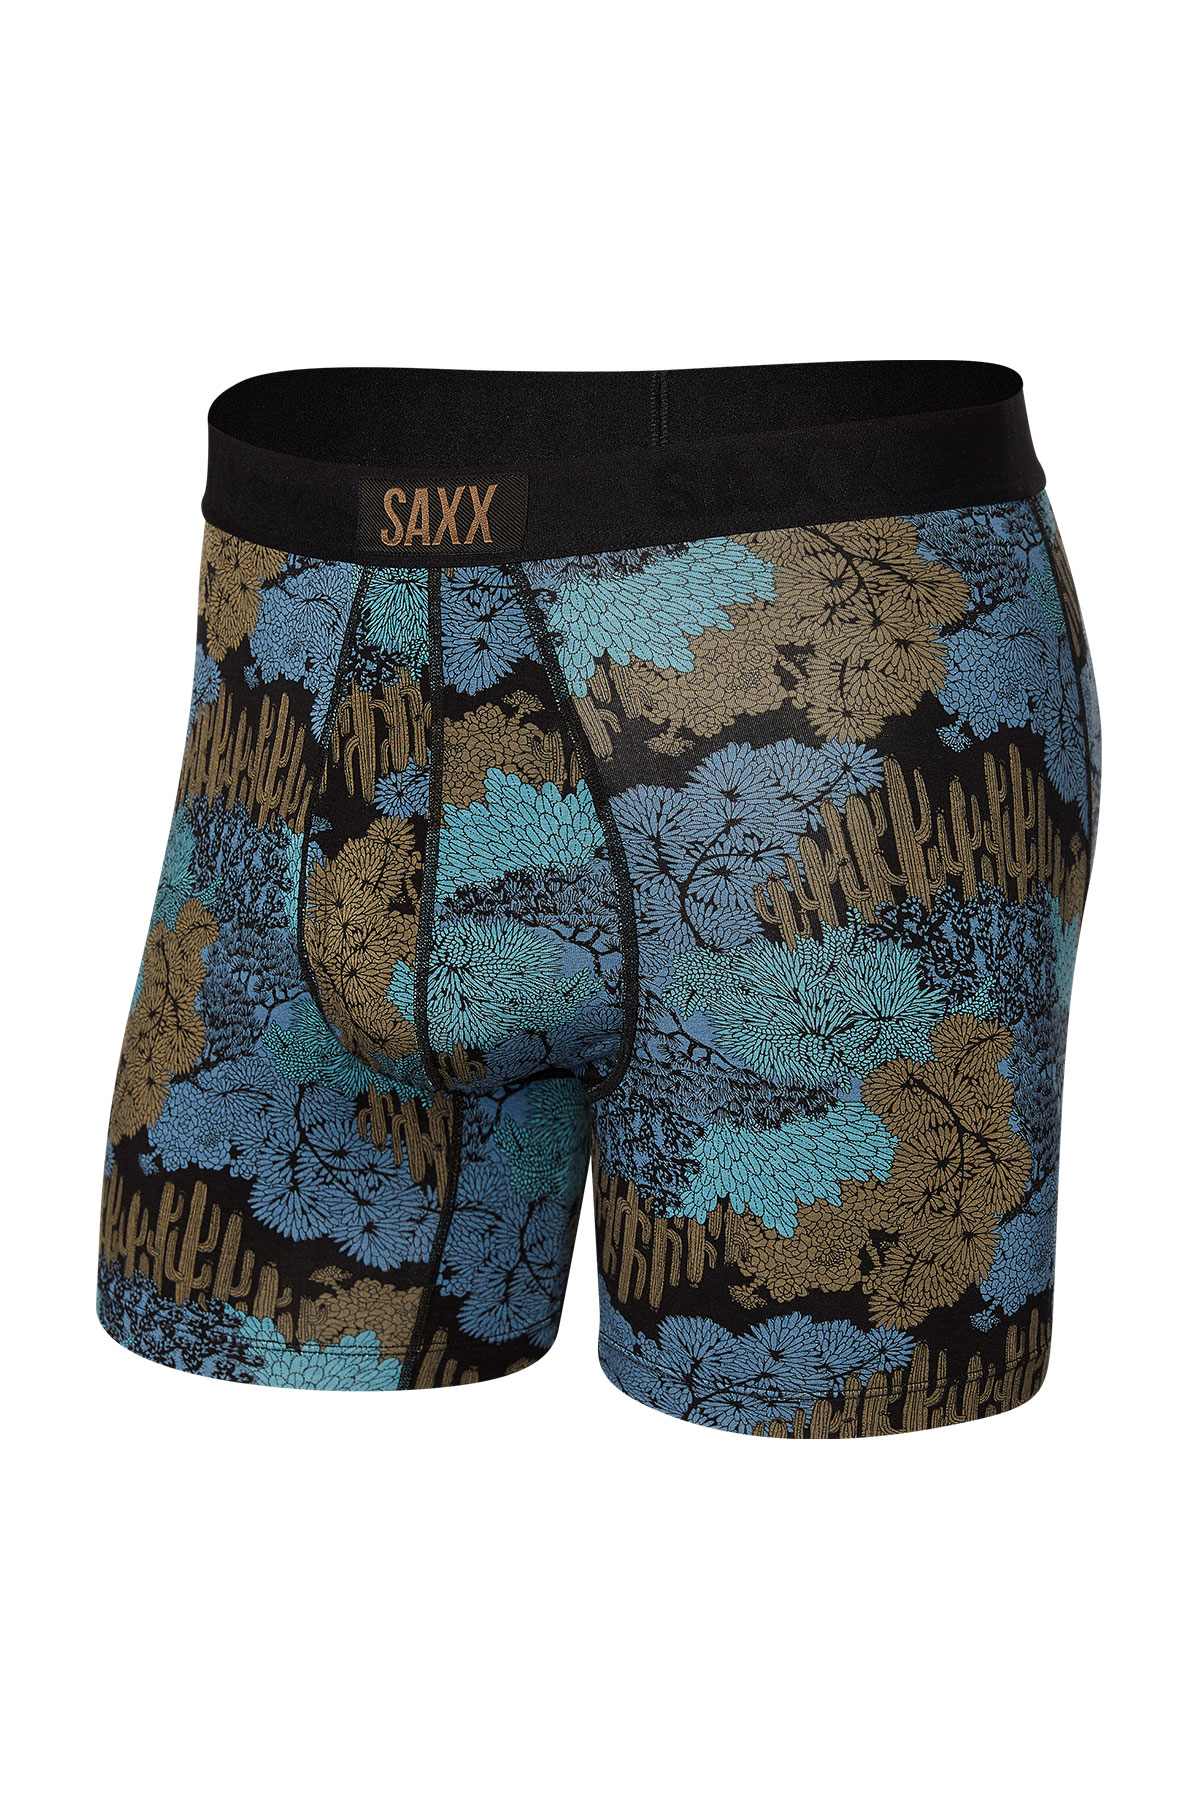 Saxx Underwear Men's Boxer Briefs - Vibe Boxer Briefs with Built-in  Ballpark Pouch Support - Underwear for Men,Blue Camo,Small